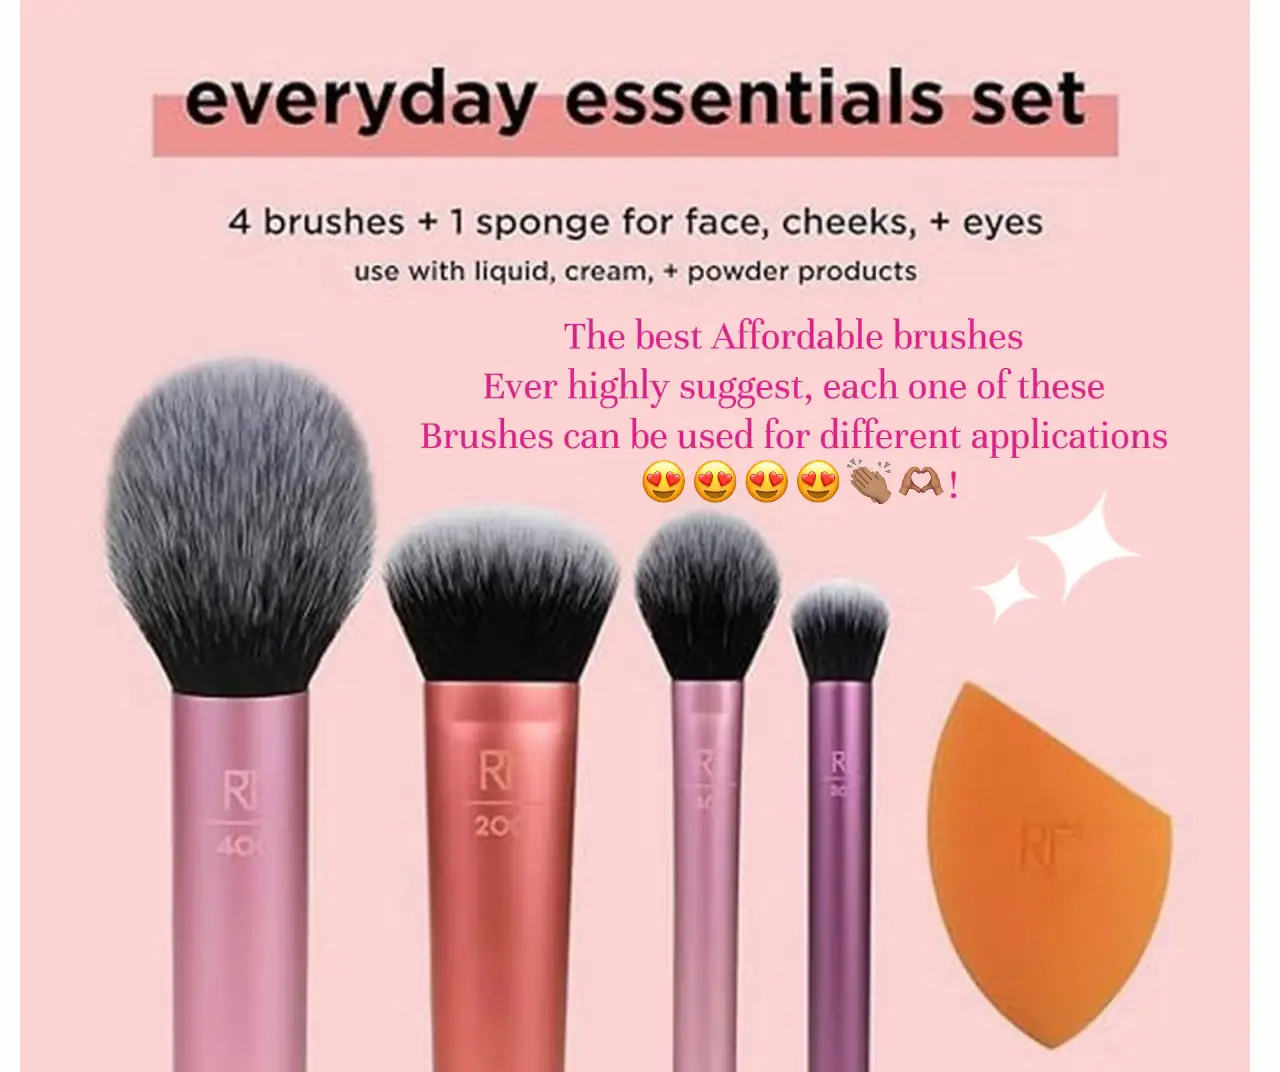 makeup artist kit essentials - Lemon8 Search